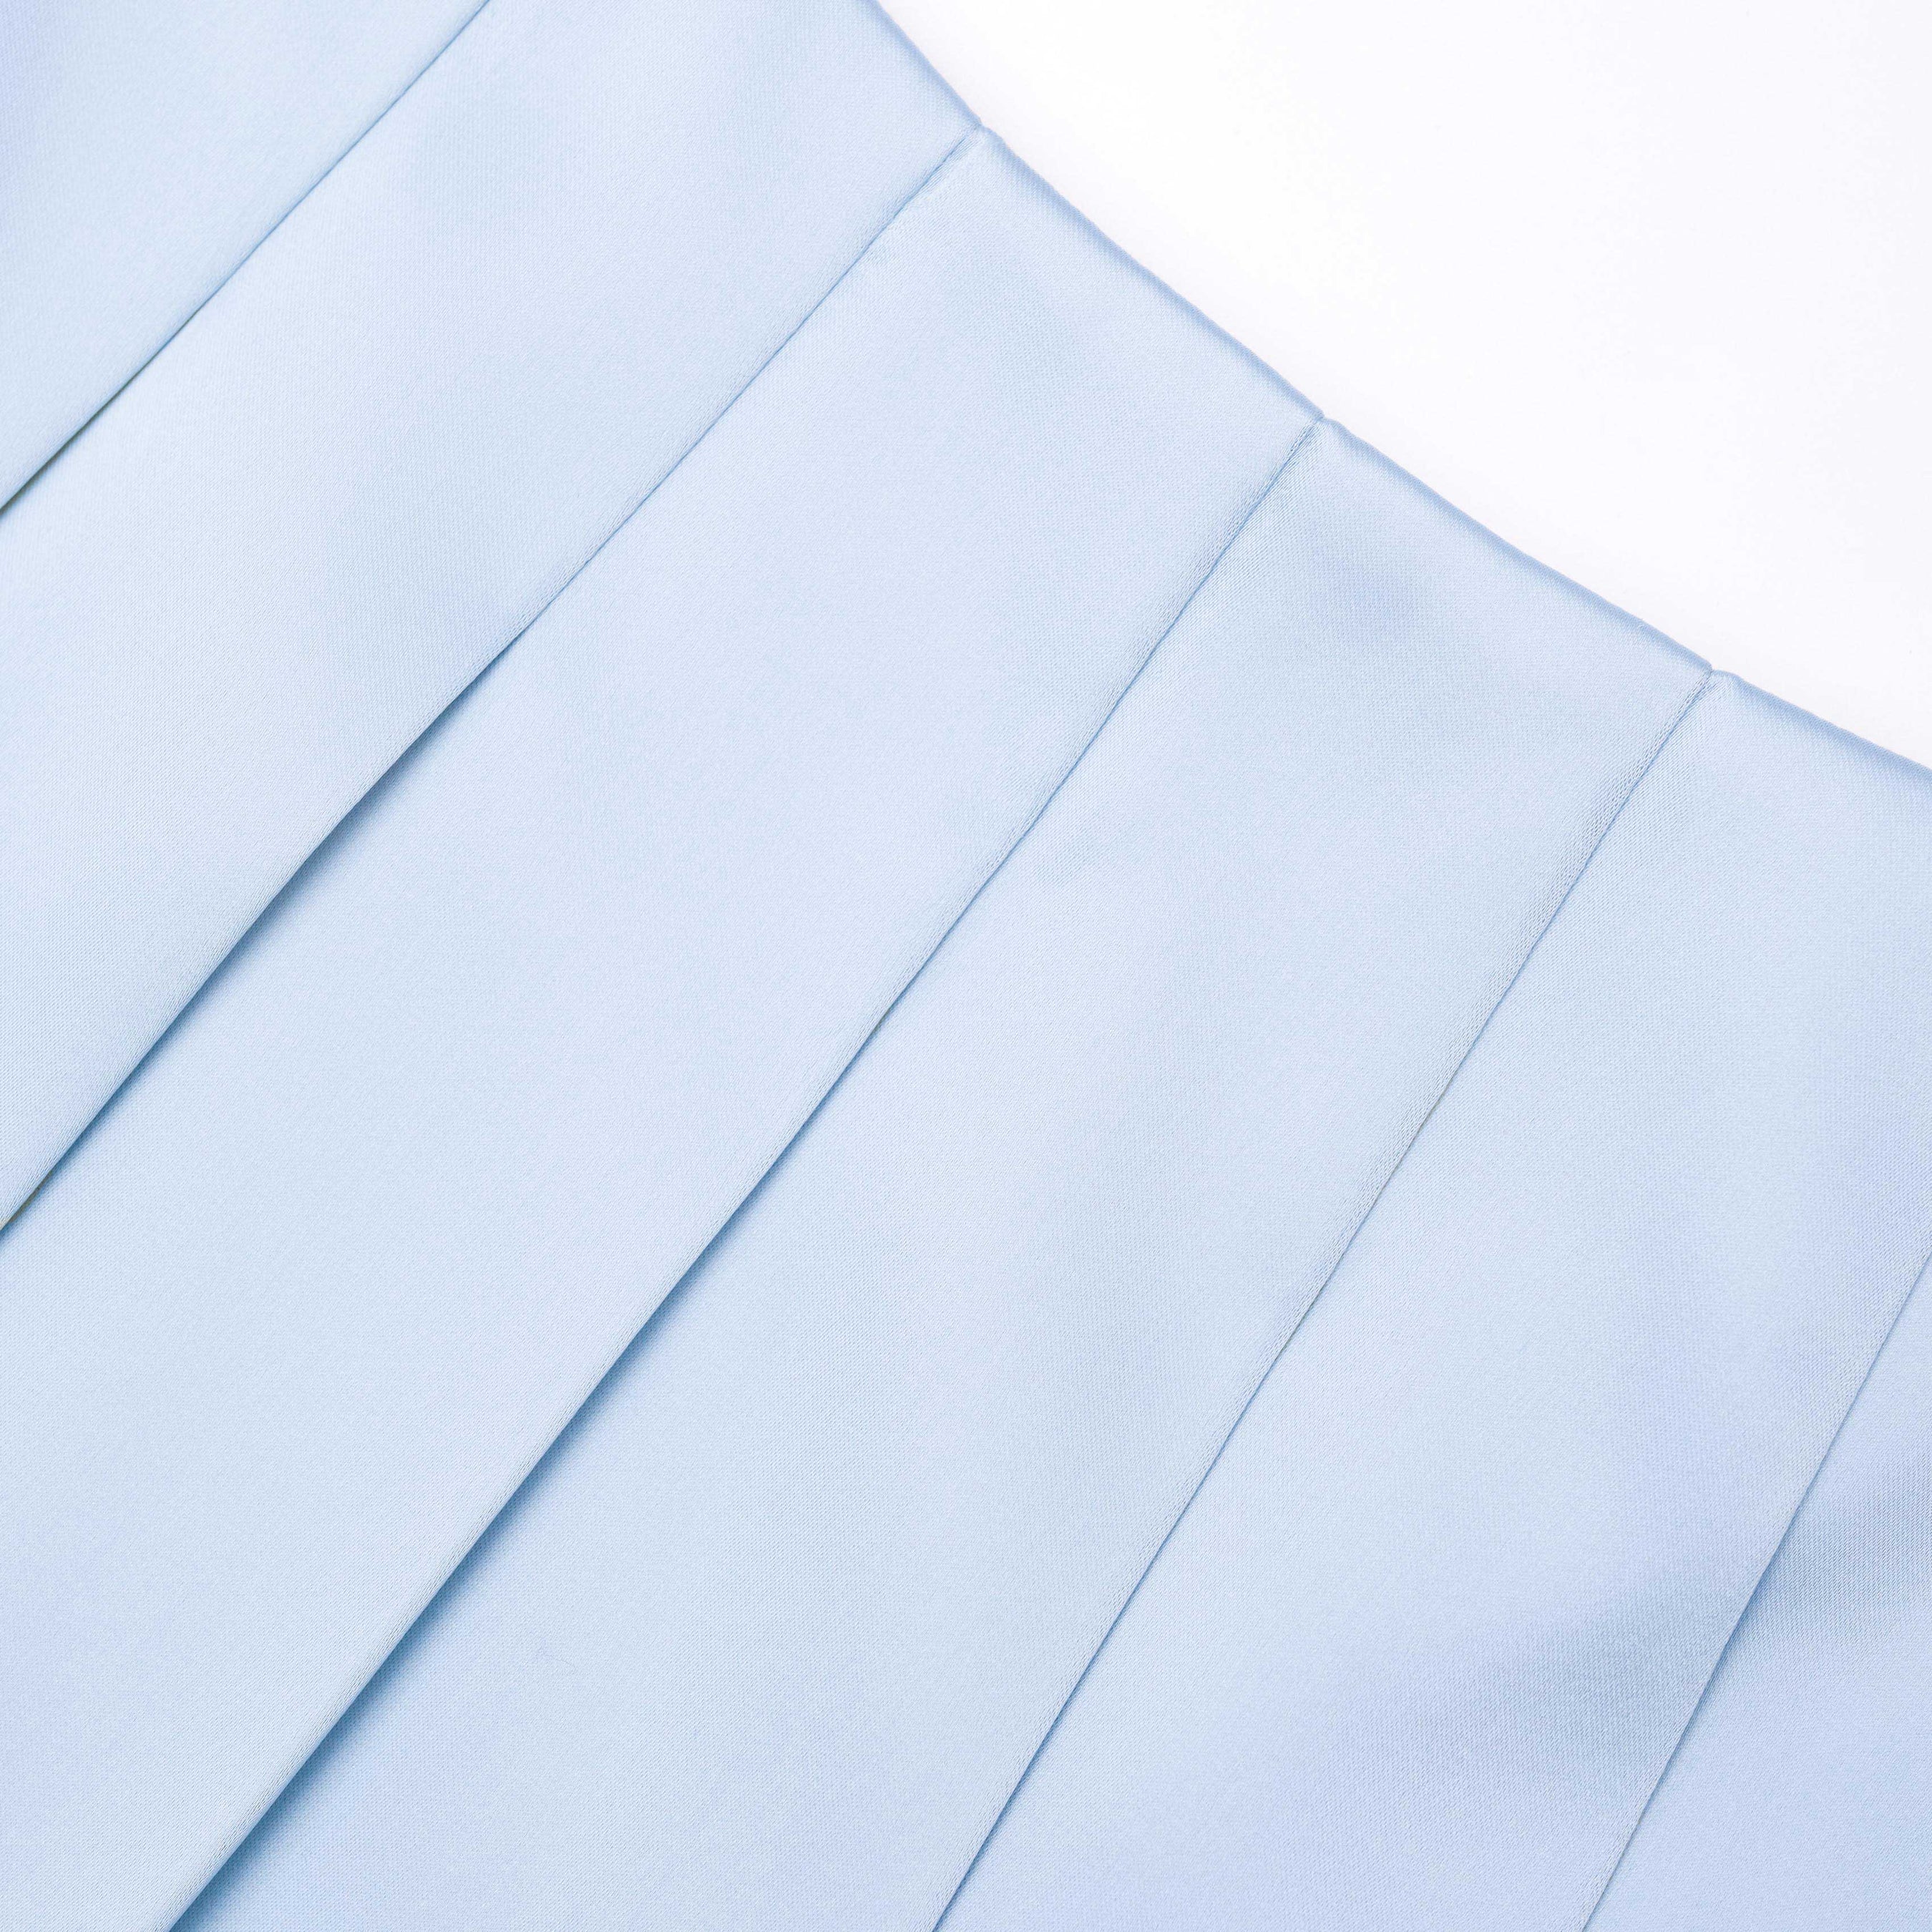 Blue Satin Midi Skirt